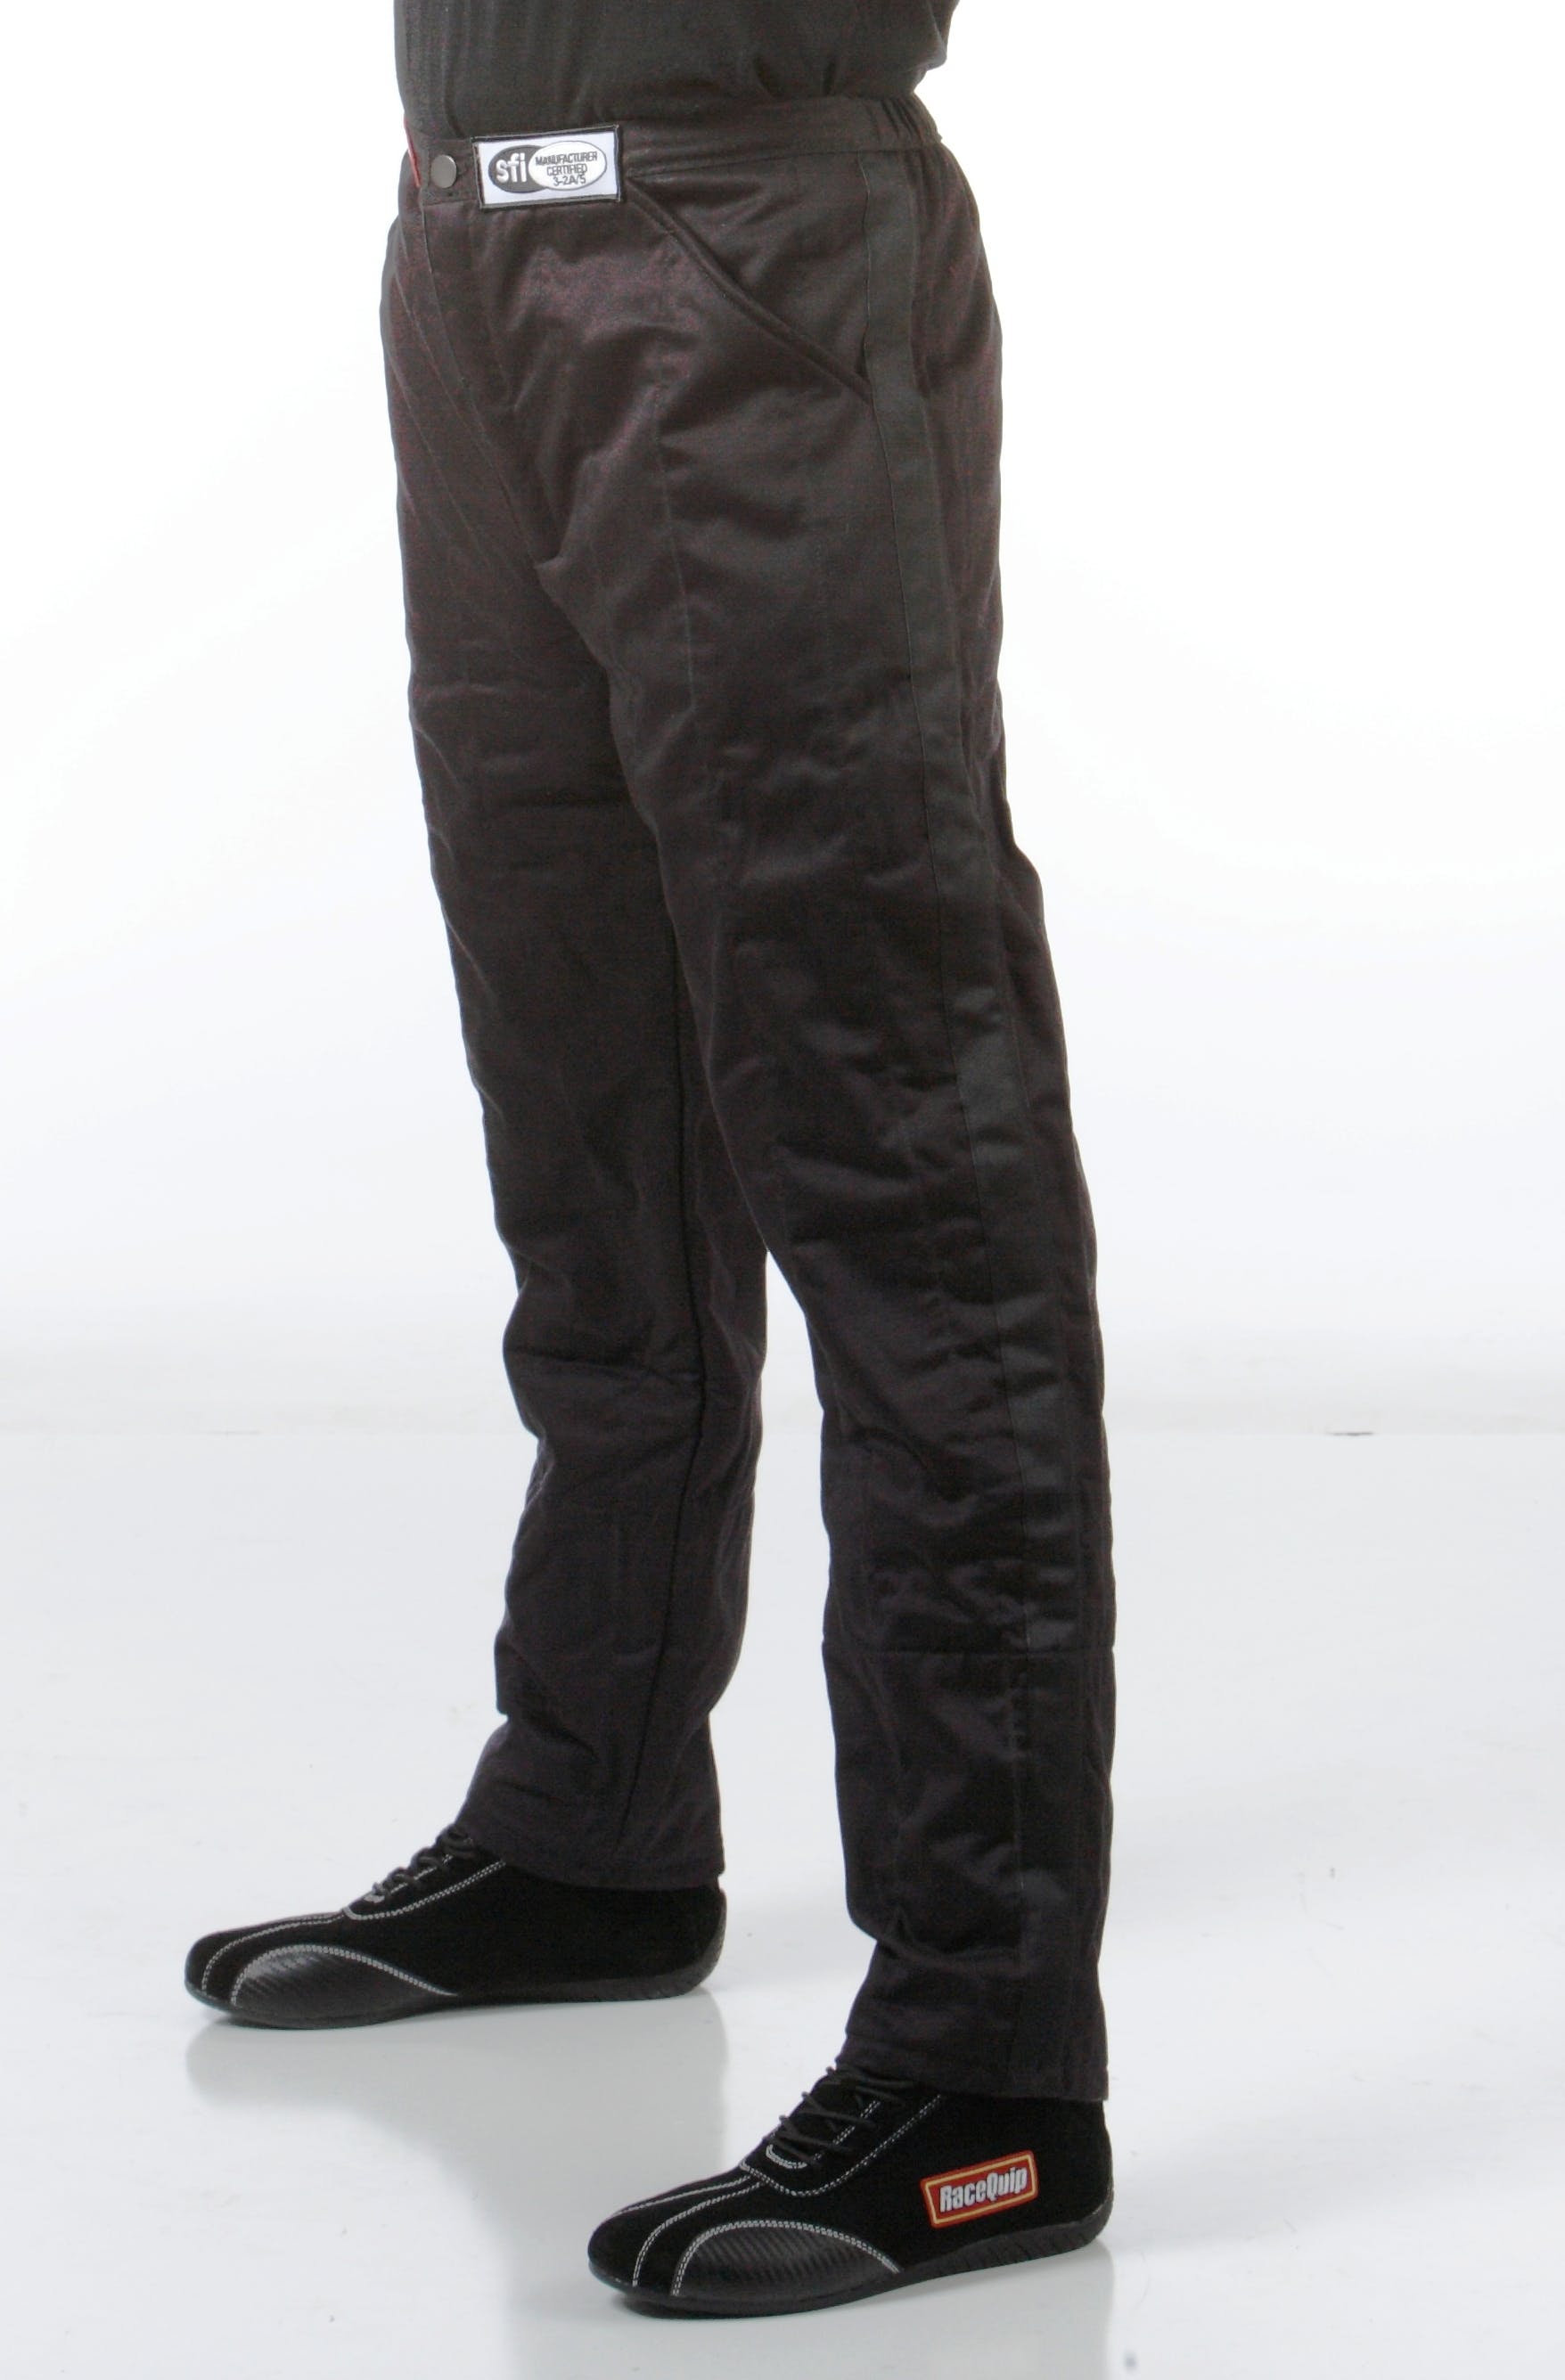 RaceQuip 122003 SFI-5 Pyrovatex Multi-Layer Racing Fire Pants (Black, Medium)